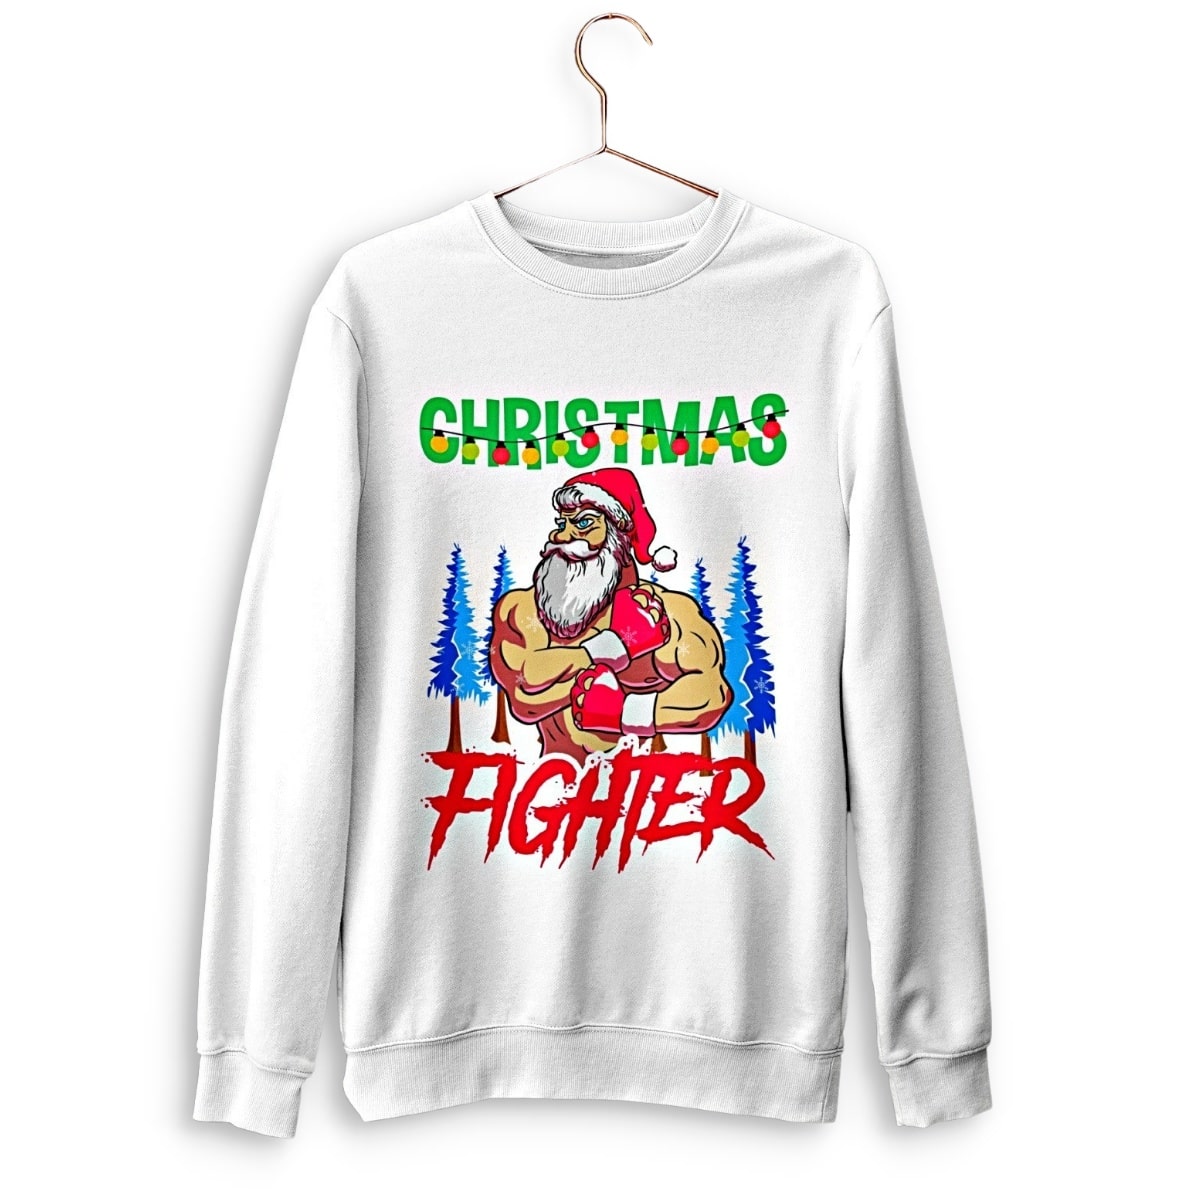 Christmas FIGHTER! Heavy Blend Christmas Sweater, White - Santaland